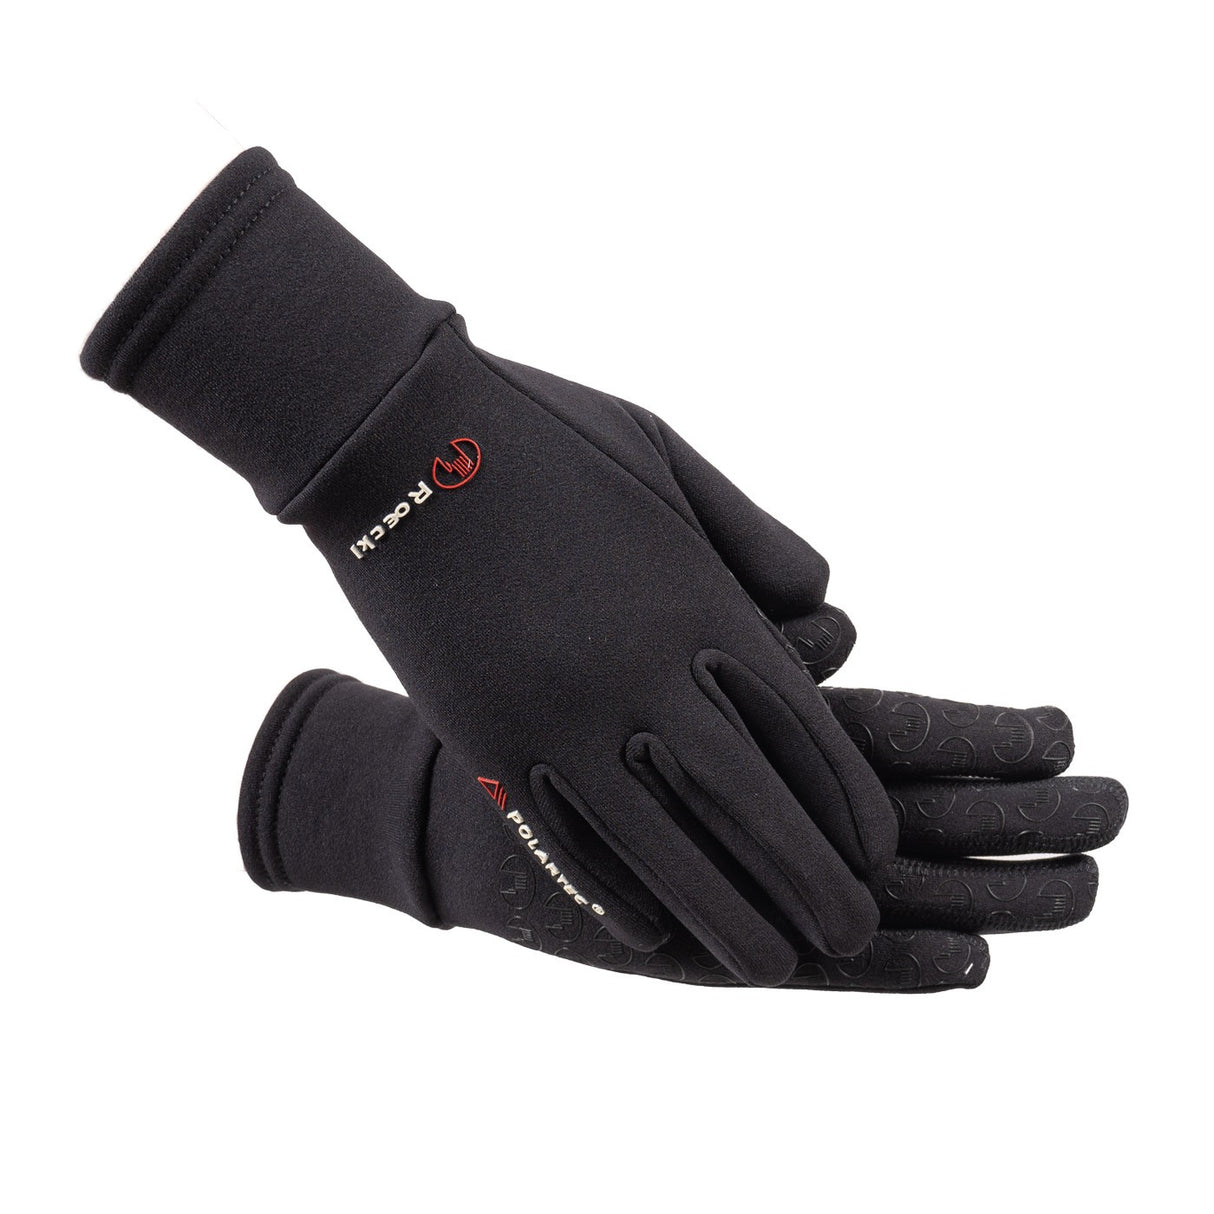 Buy Roecl Weldon Polartec Power Stretch gloves